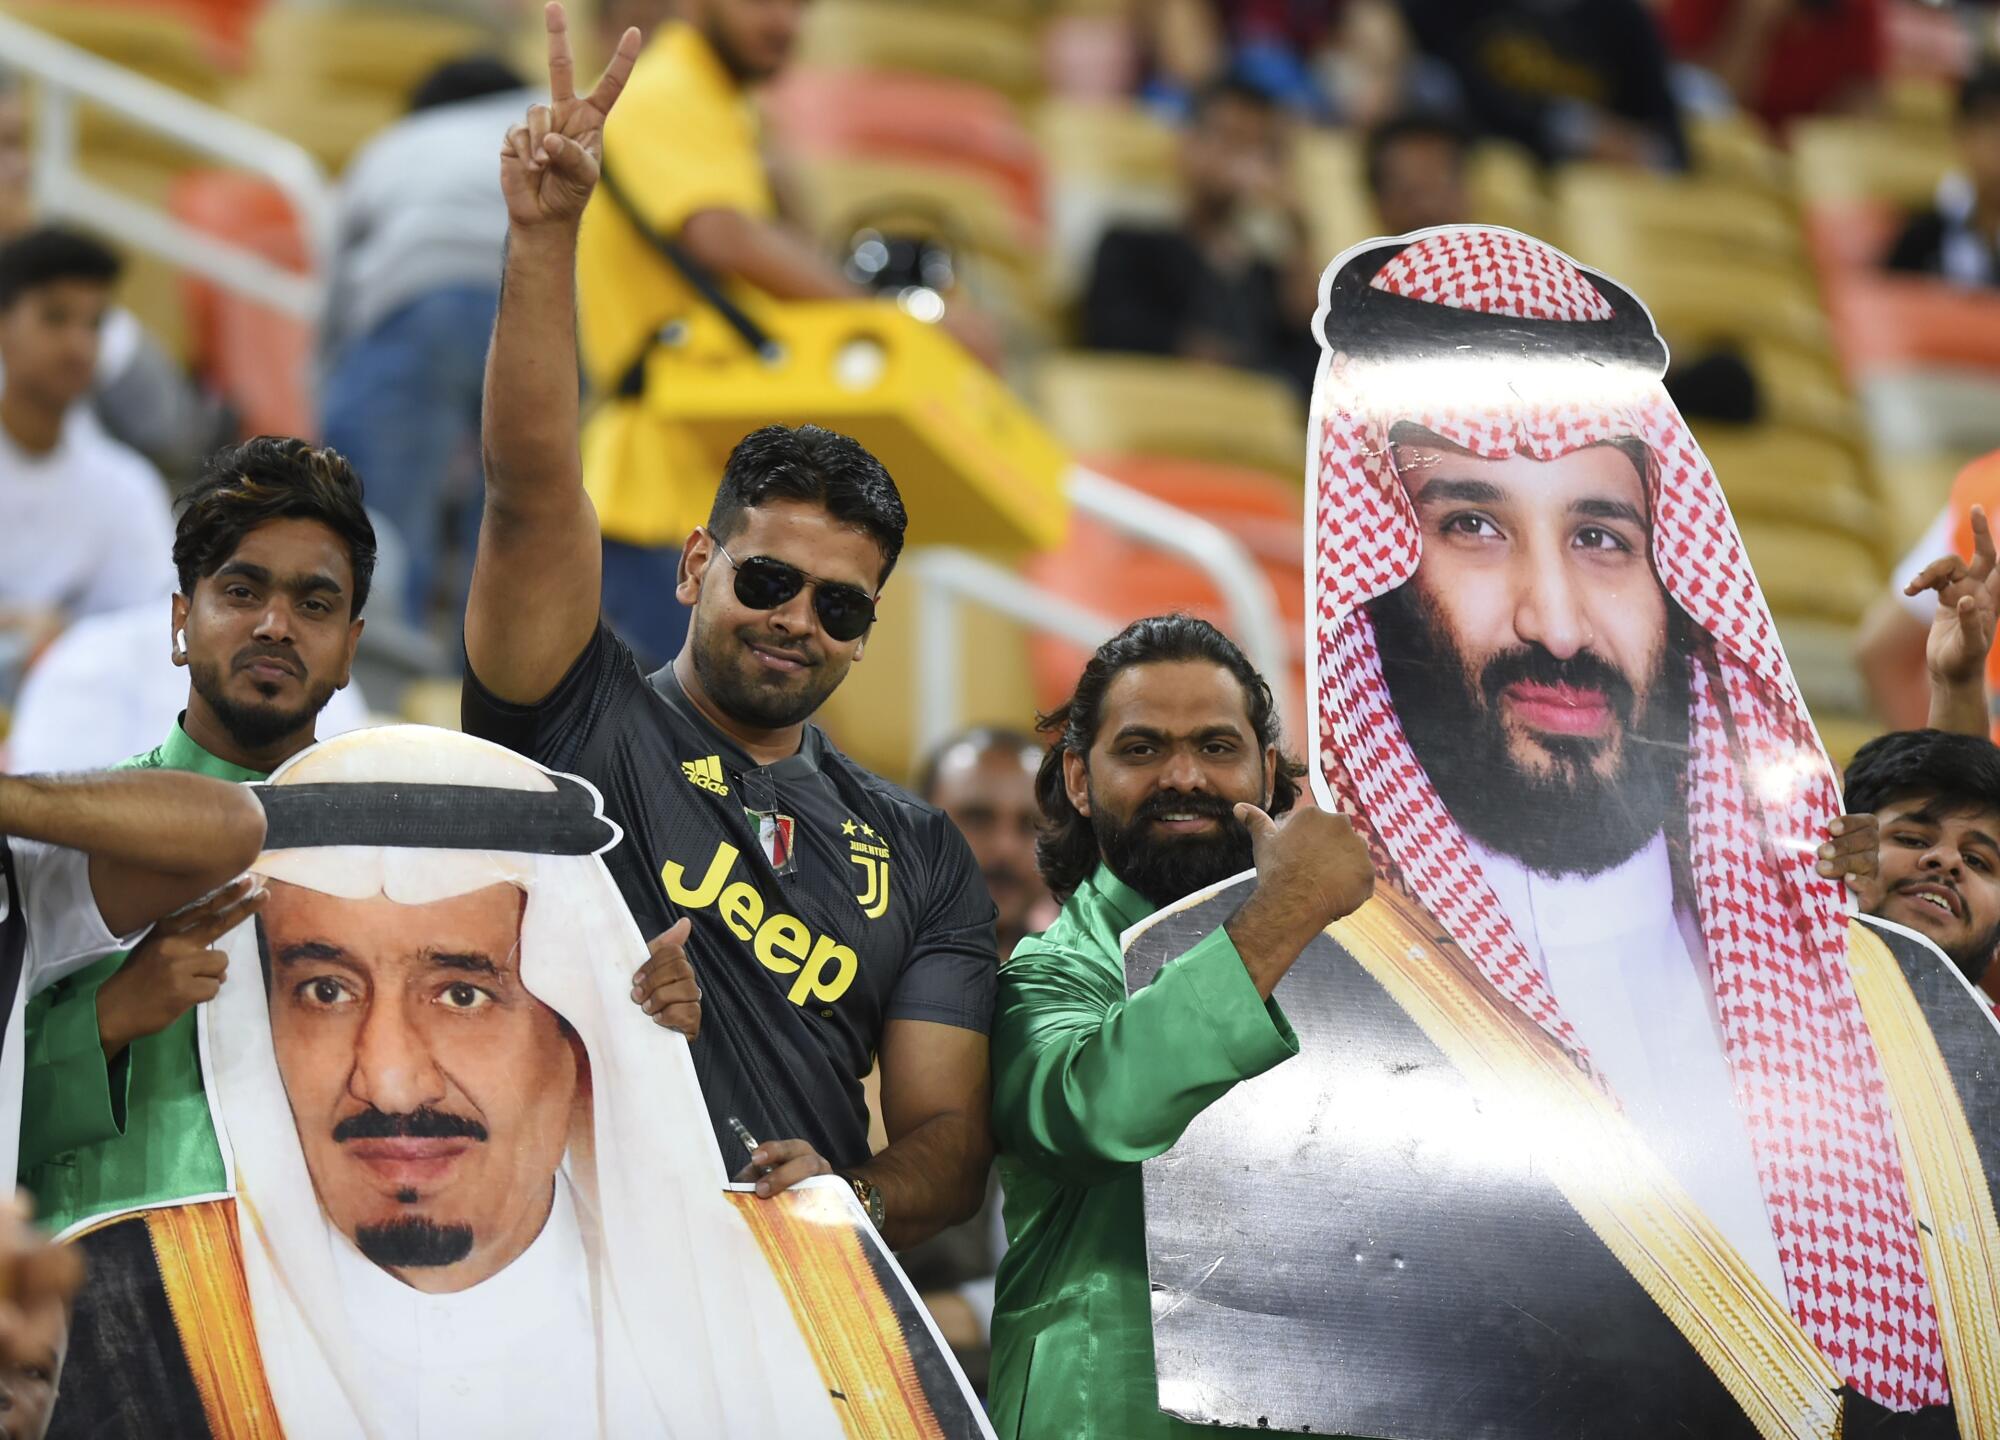 Men hold massive cutout pictures of Saudi Arabia's King Salman and Crown Prince Mohammed bin Salman.